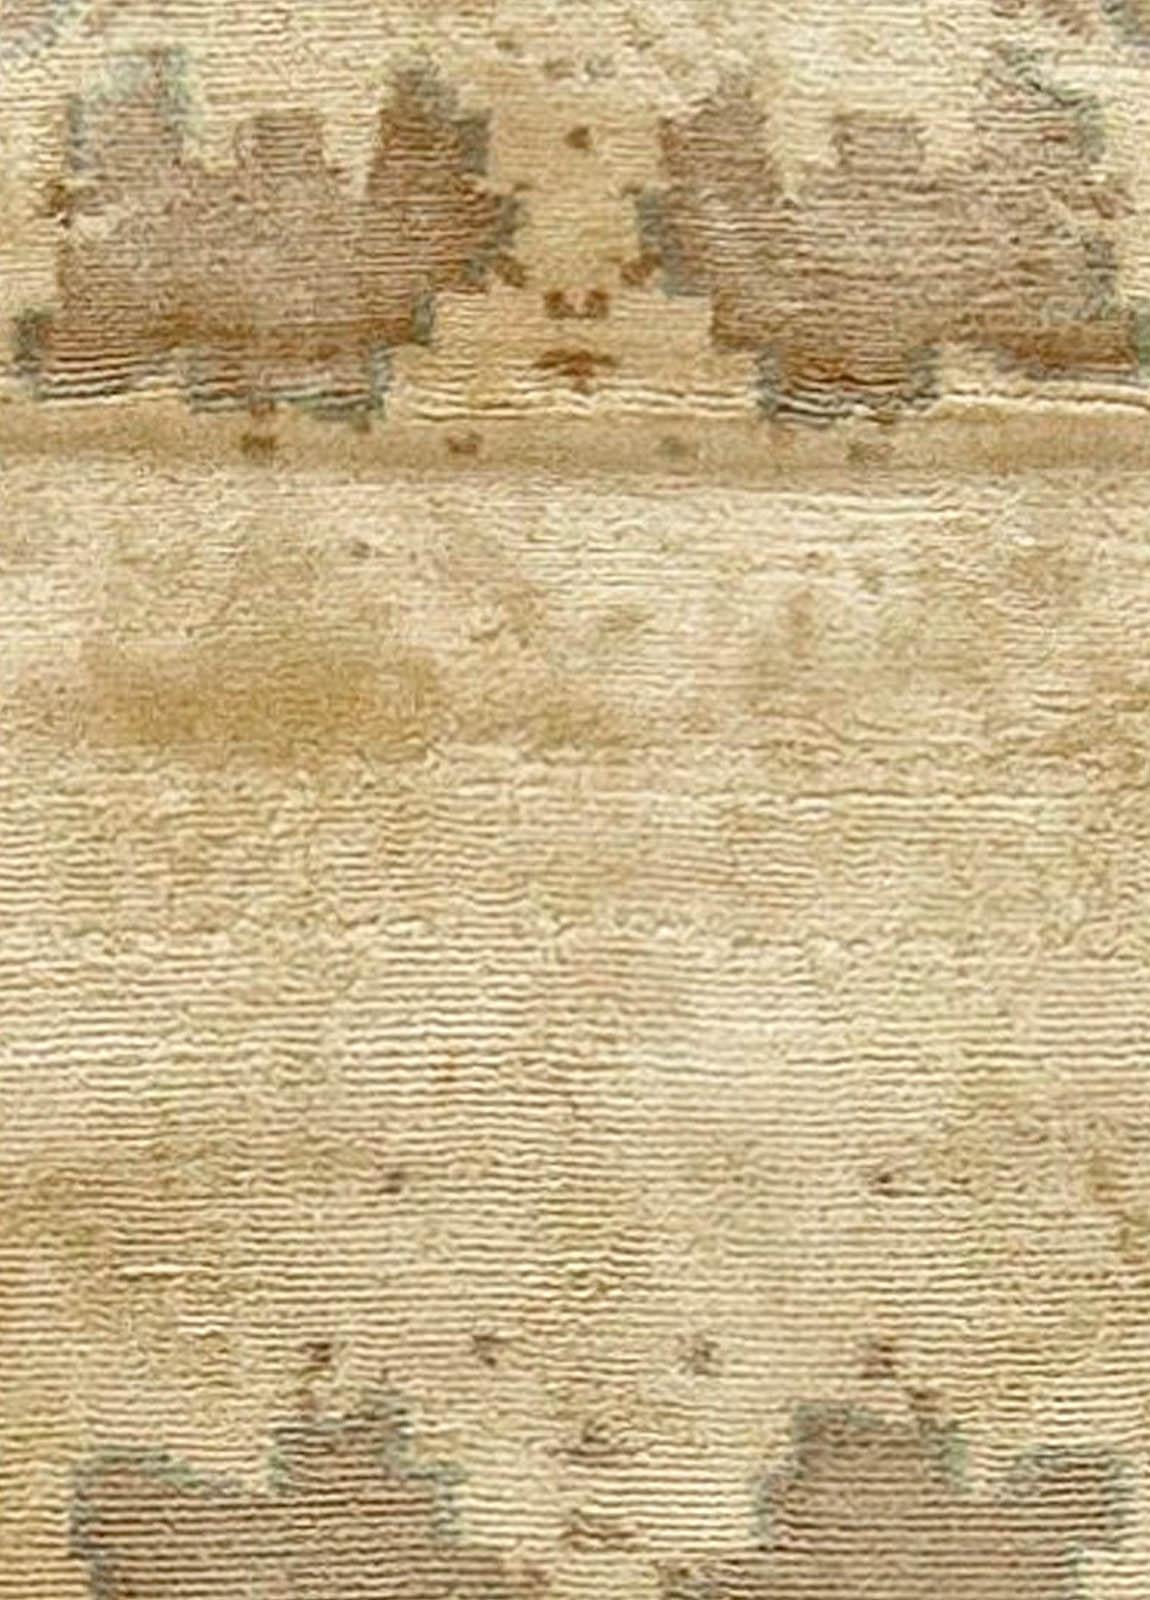 Contemporary Botanic handmade silk rug by Doris Leslie Blau
Size: 3'6